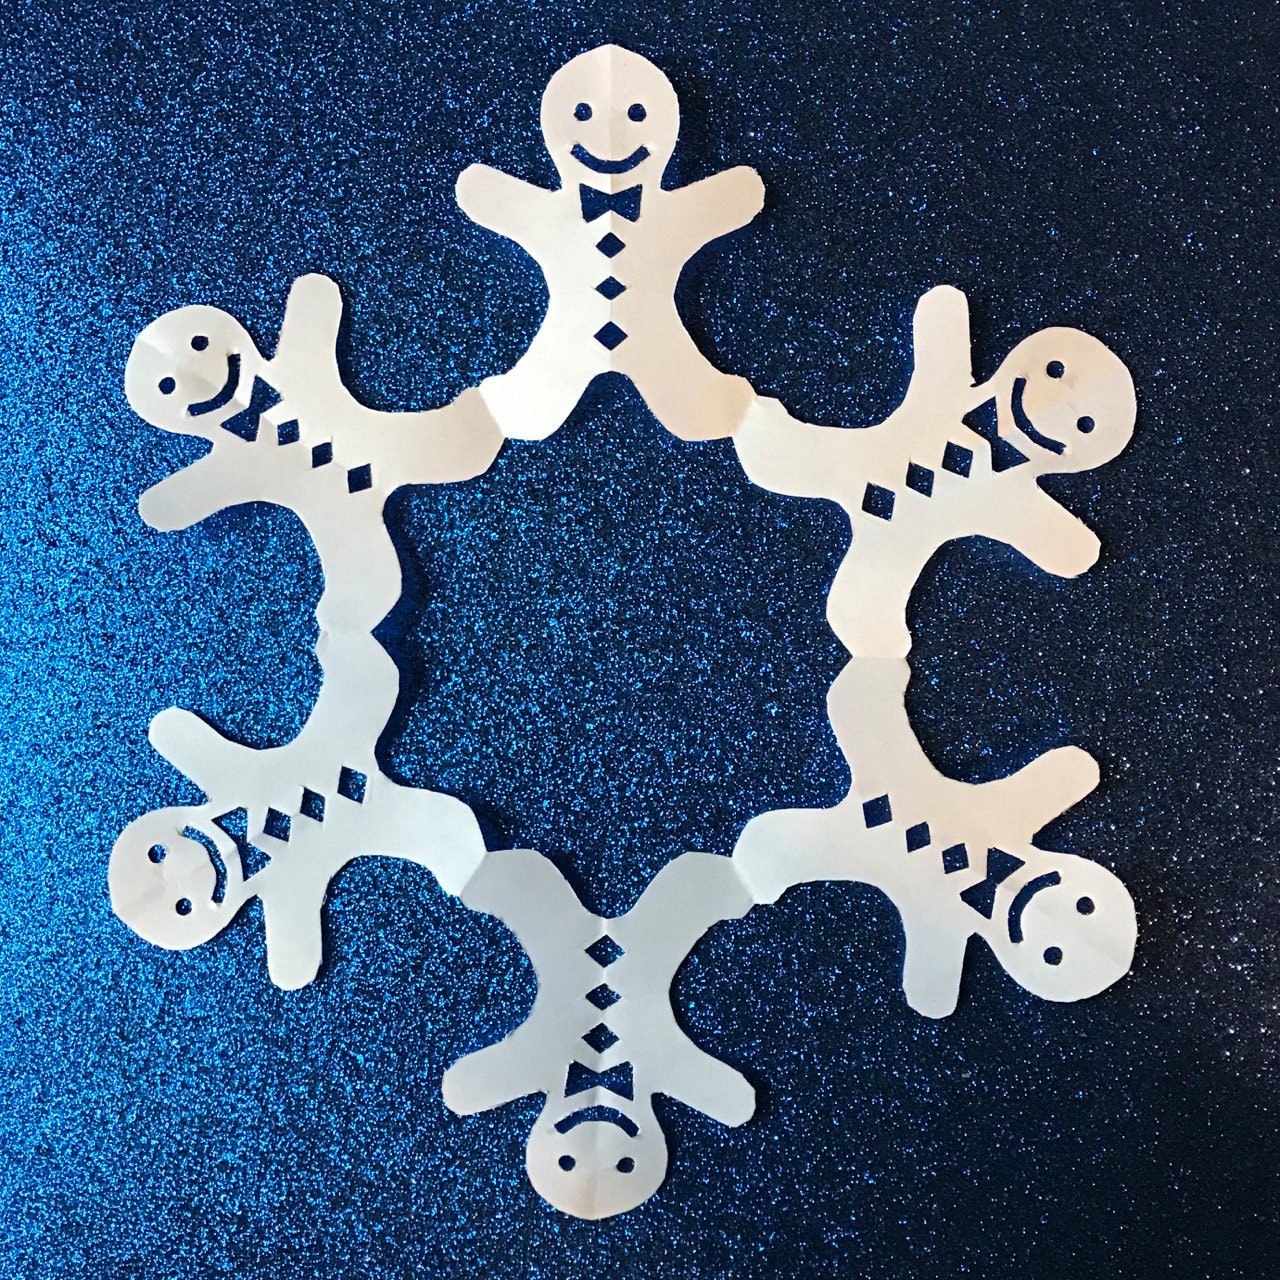 👉 Printable Small Snowflakes - Editable Christmas Craft Idea